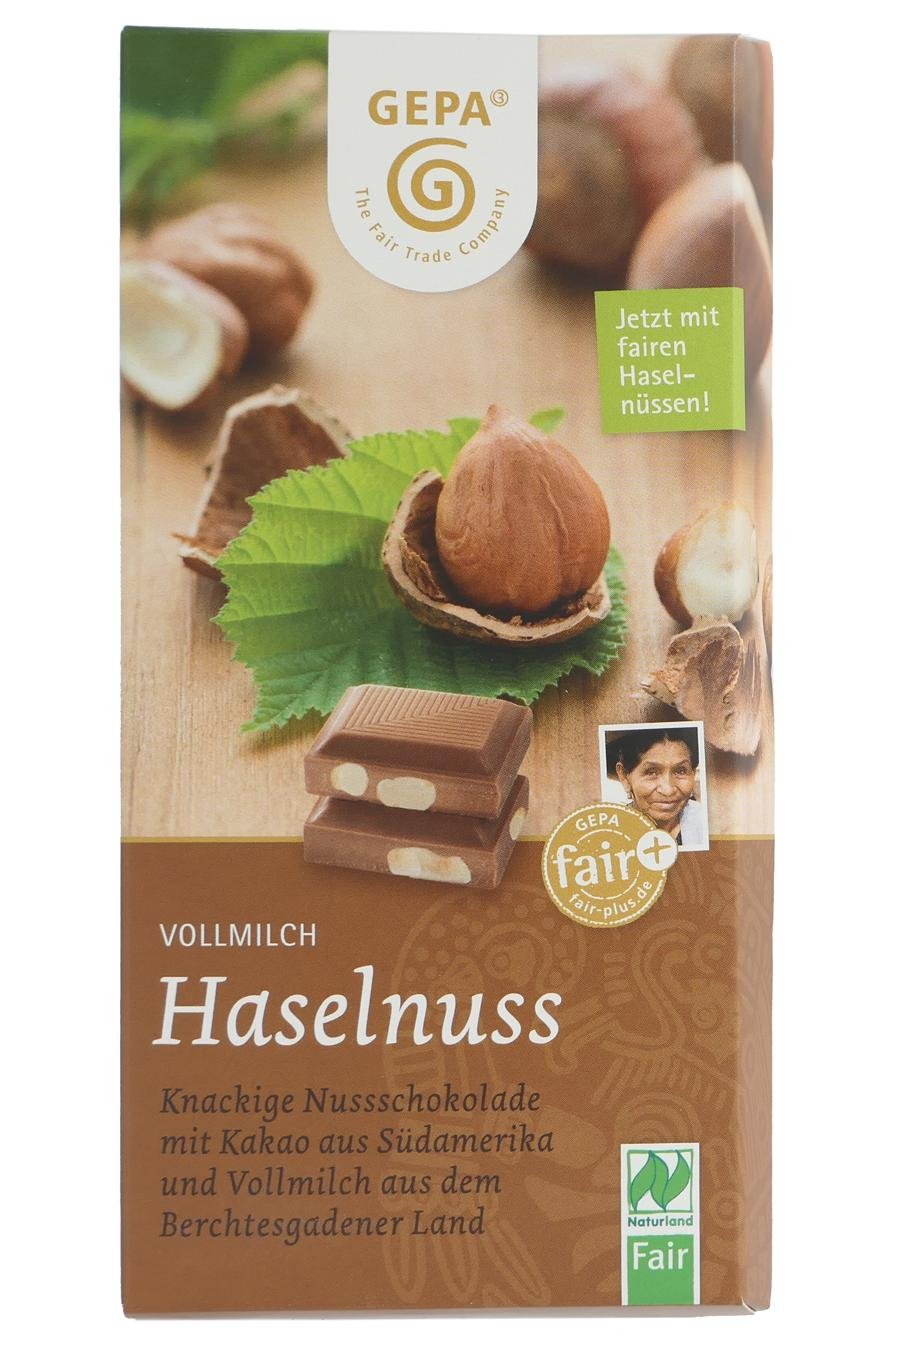 Schokolade Haselnuss (c) M. Kerk